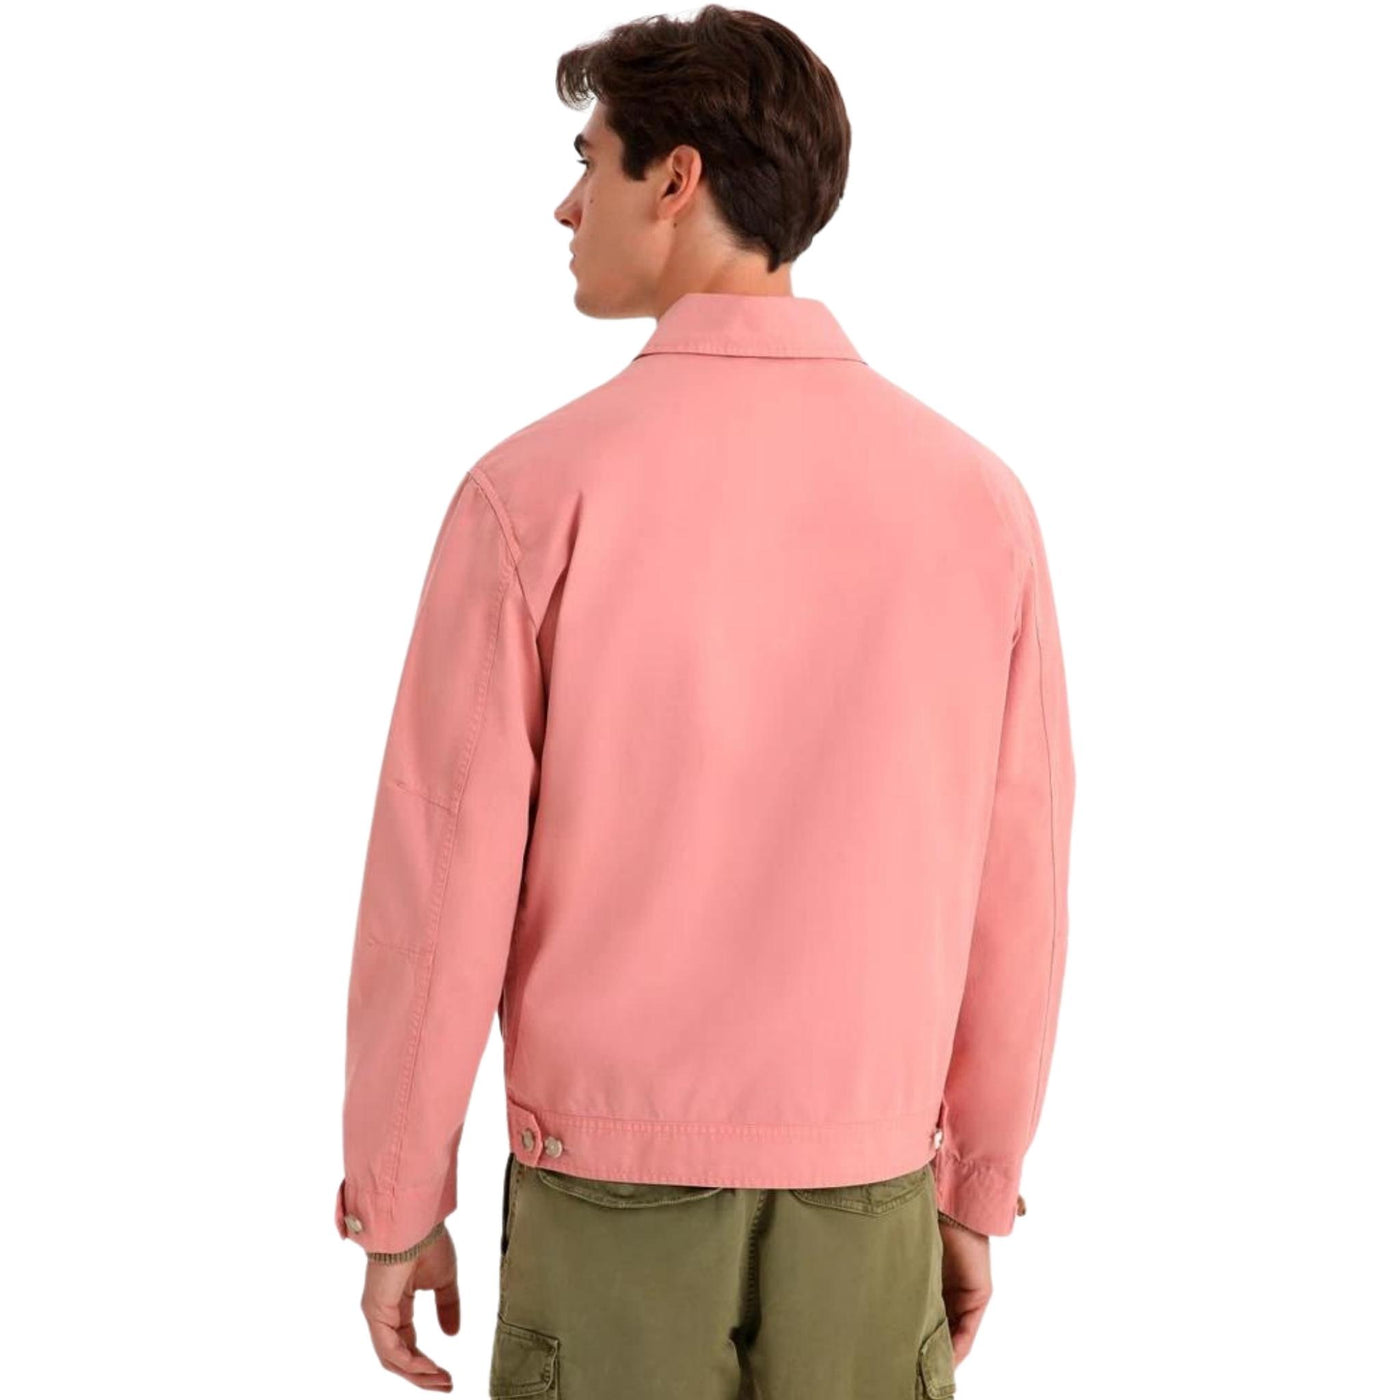 giacca uomo woolrich stile bomber in cotone rosa retro